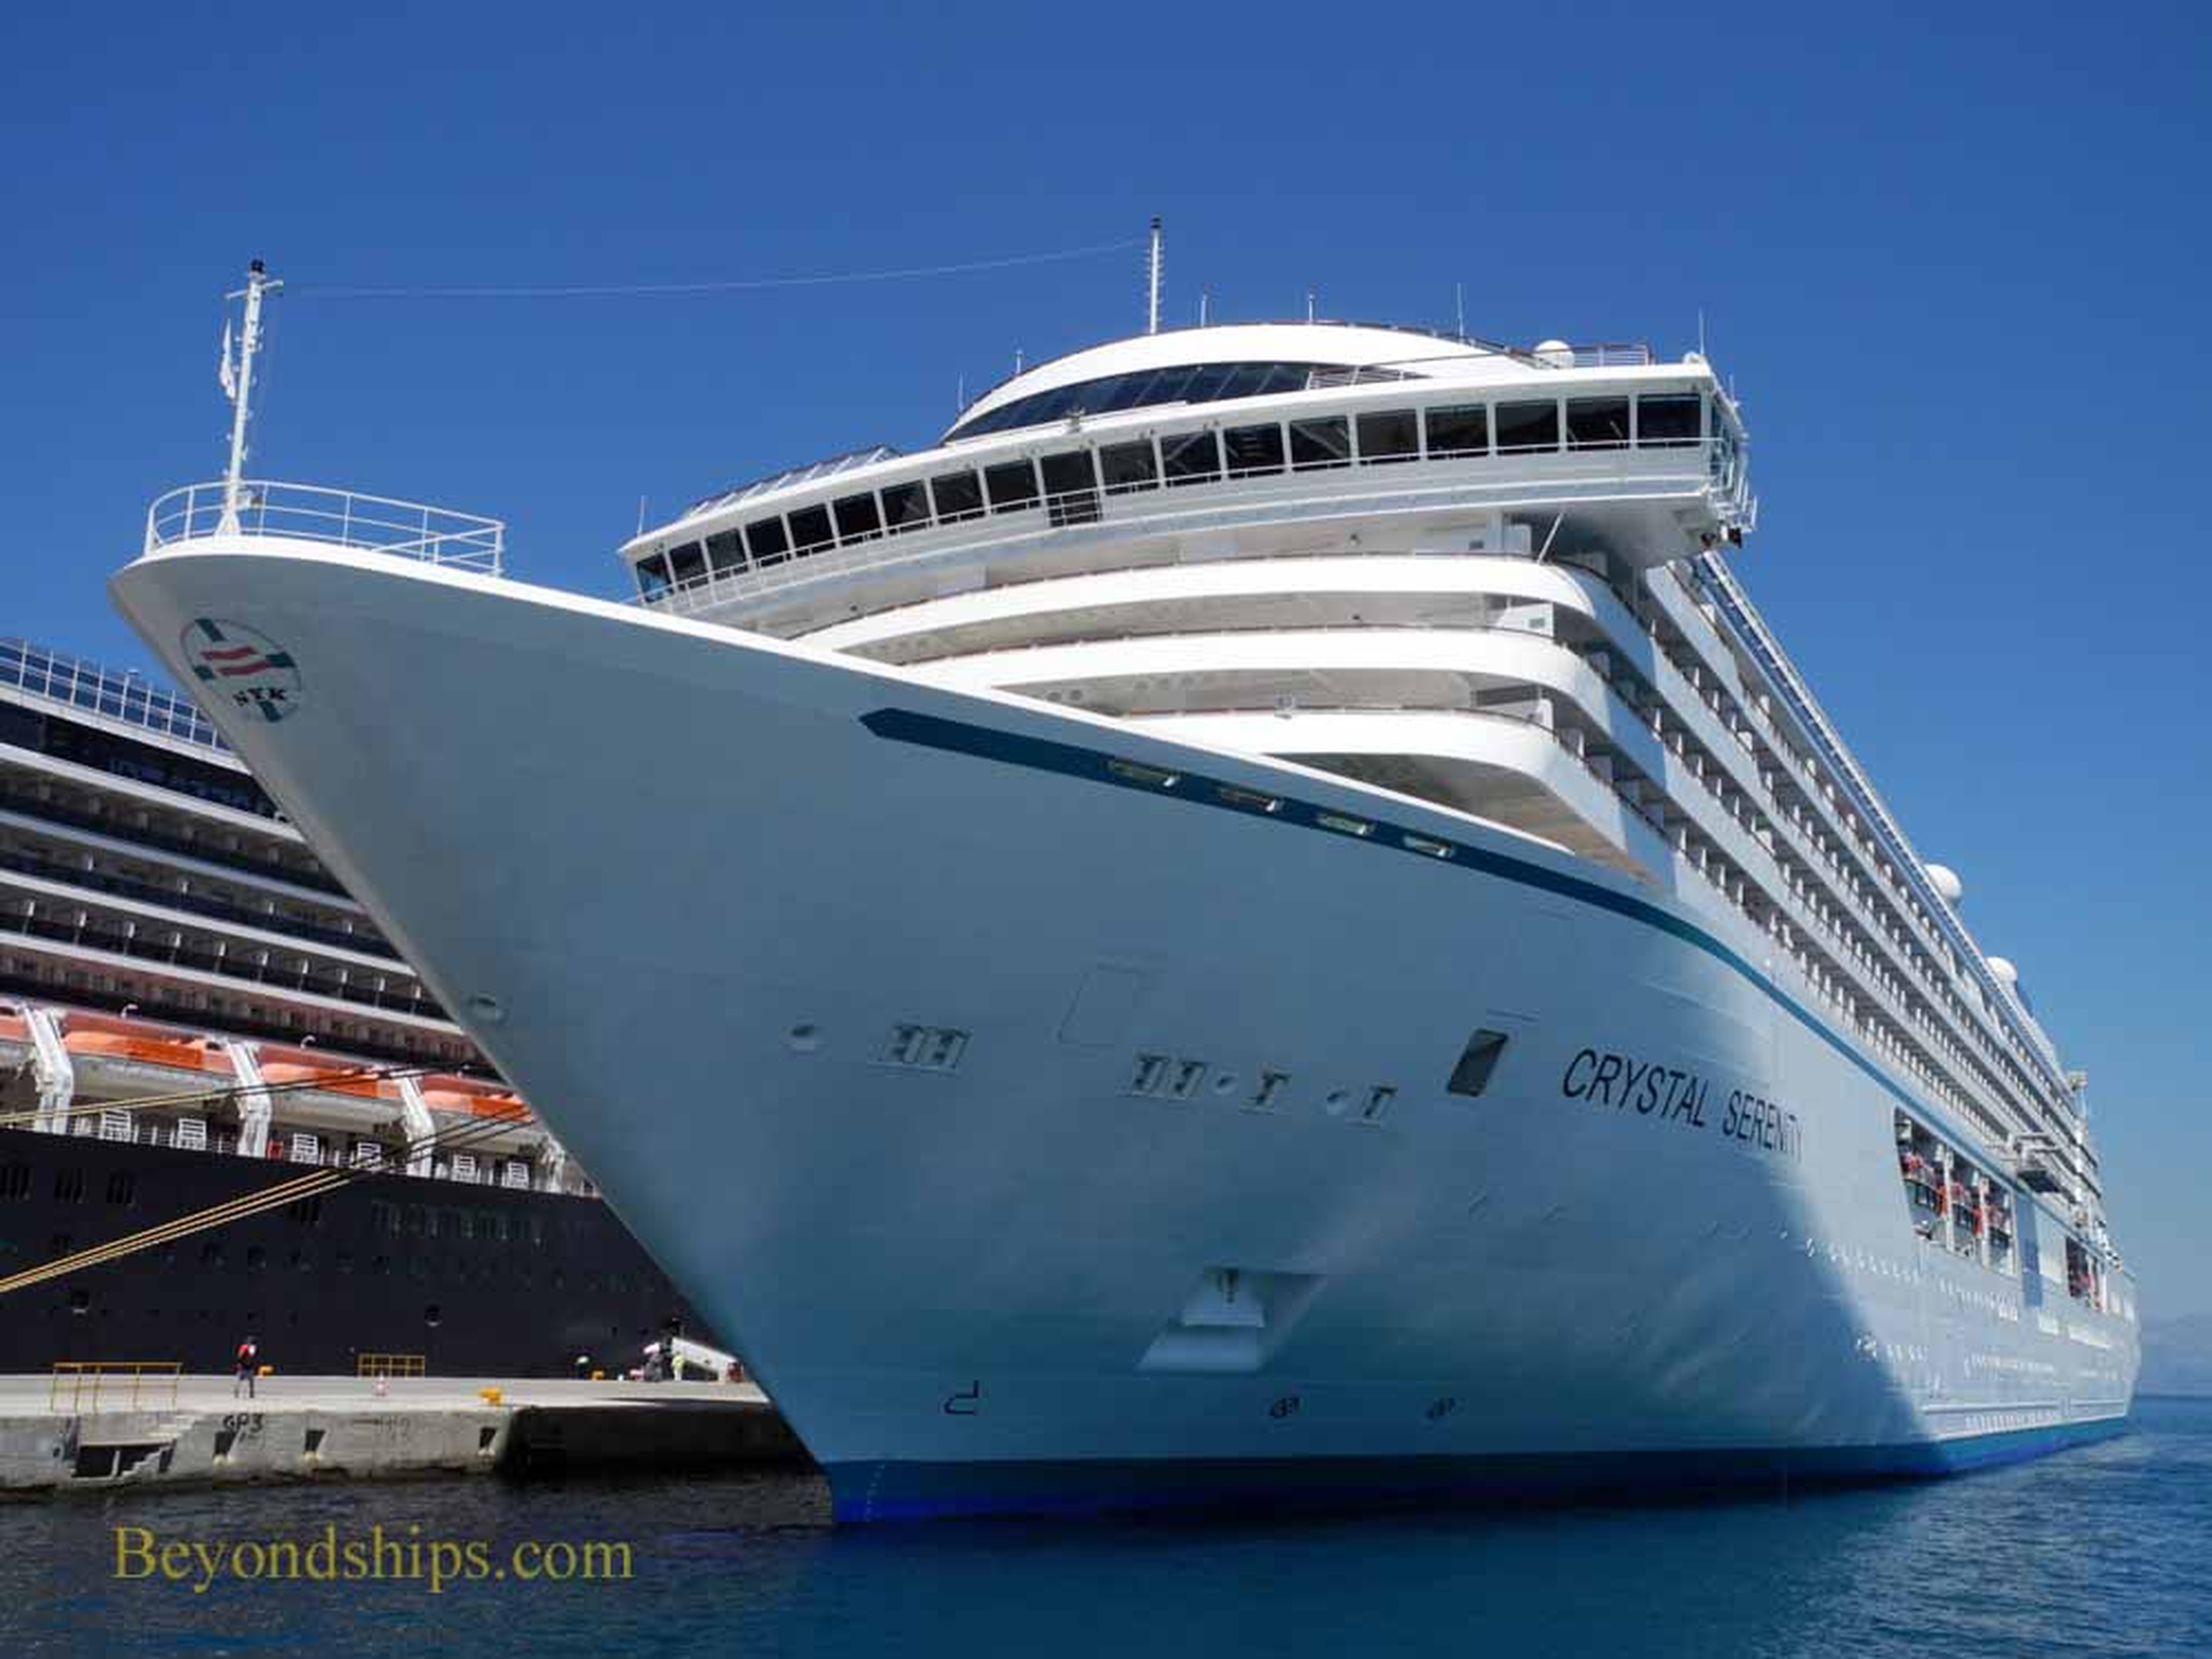 Crystal Serenity cruise ship